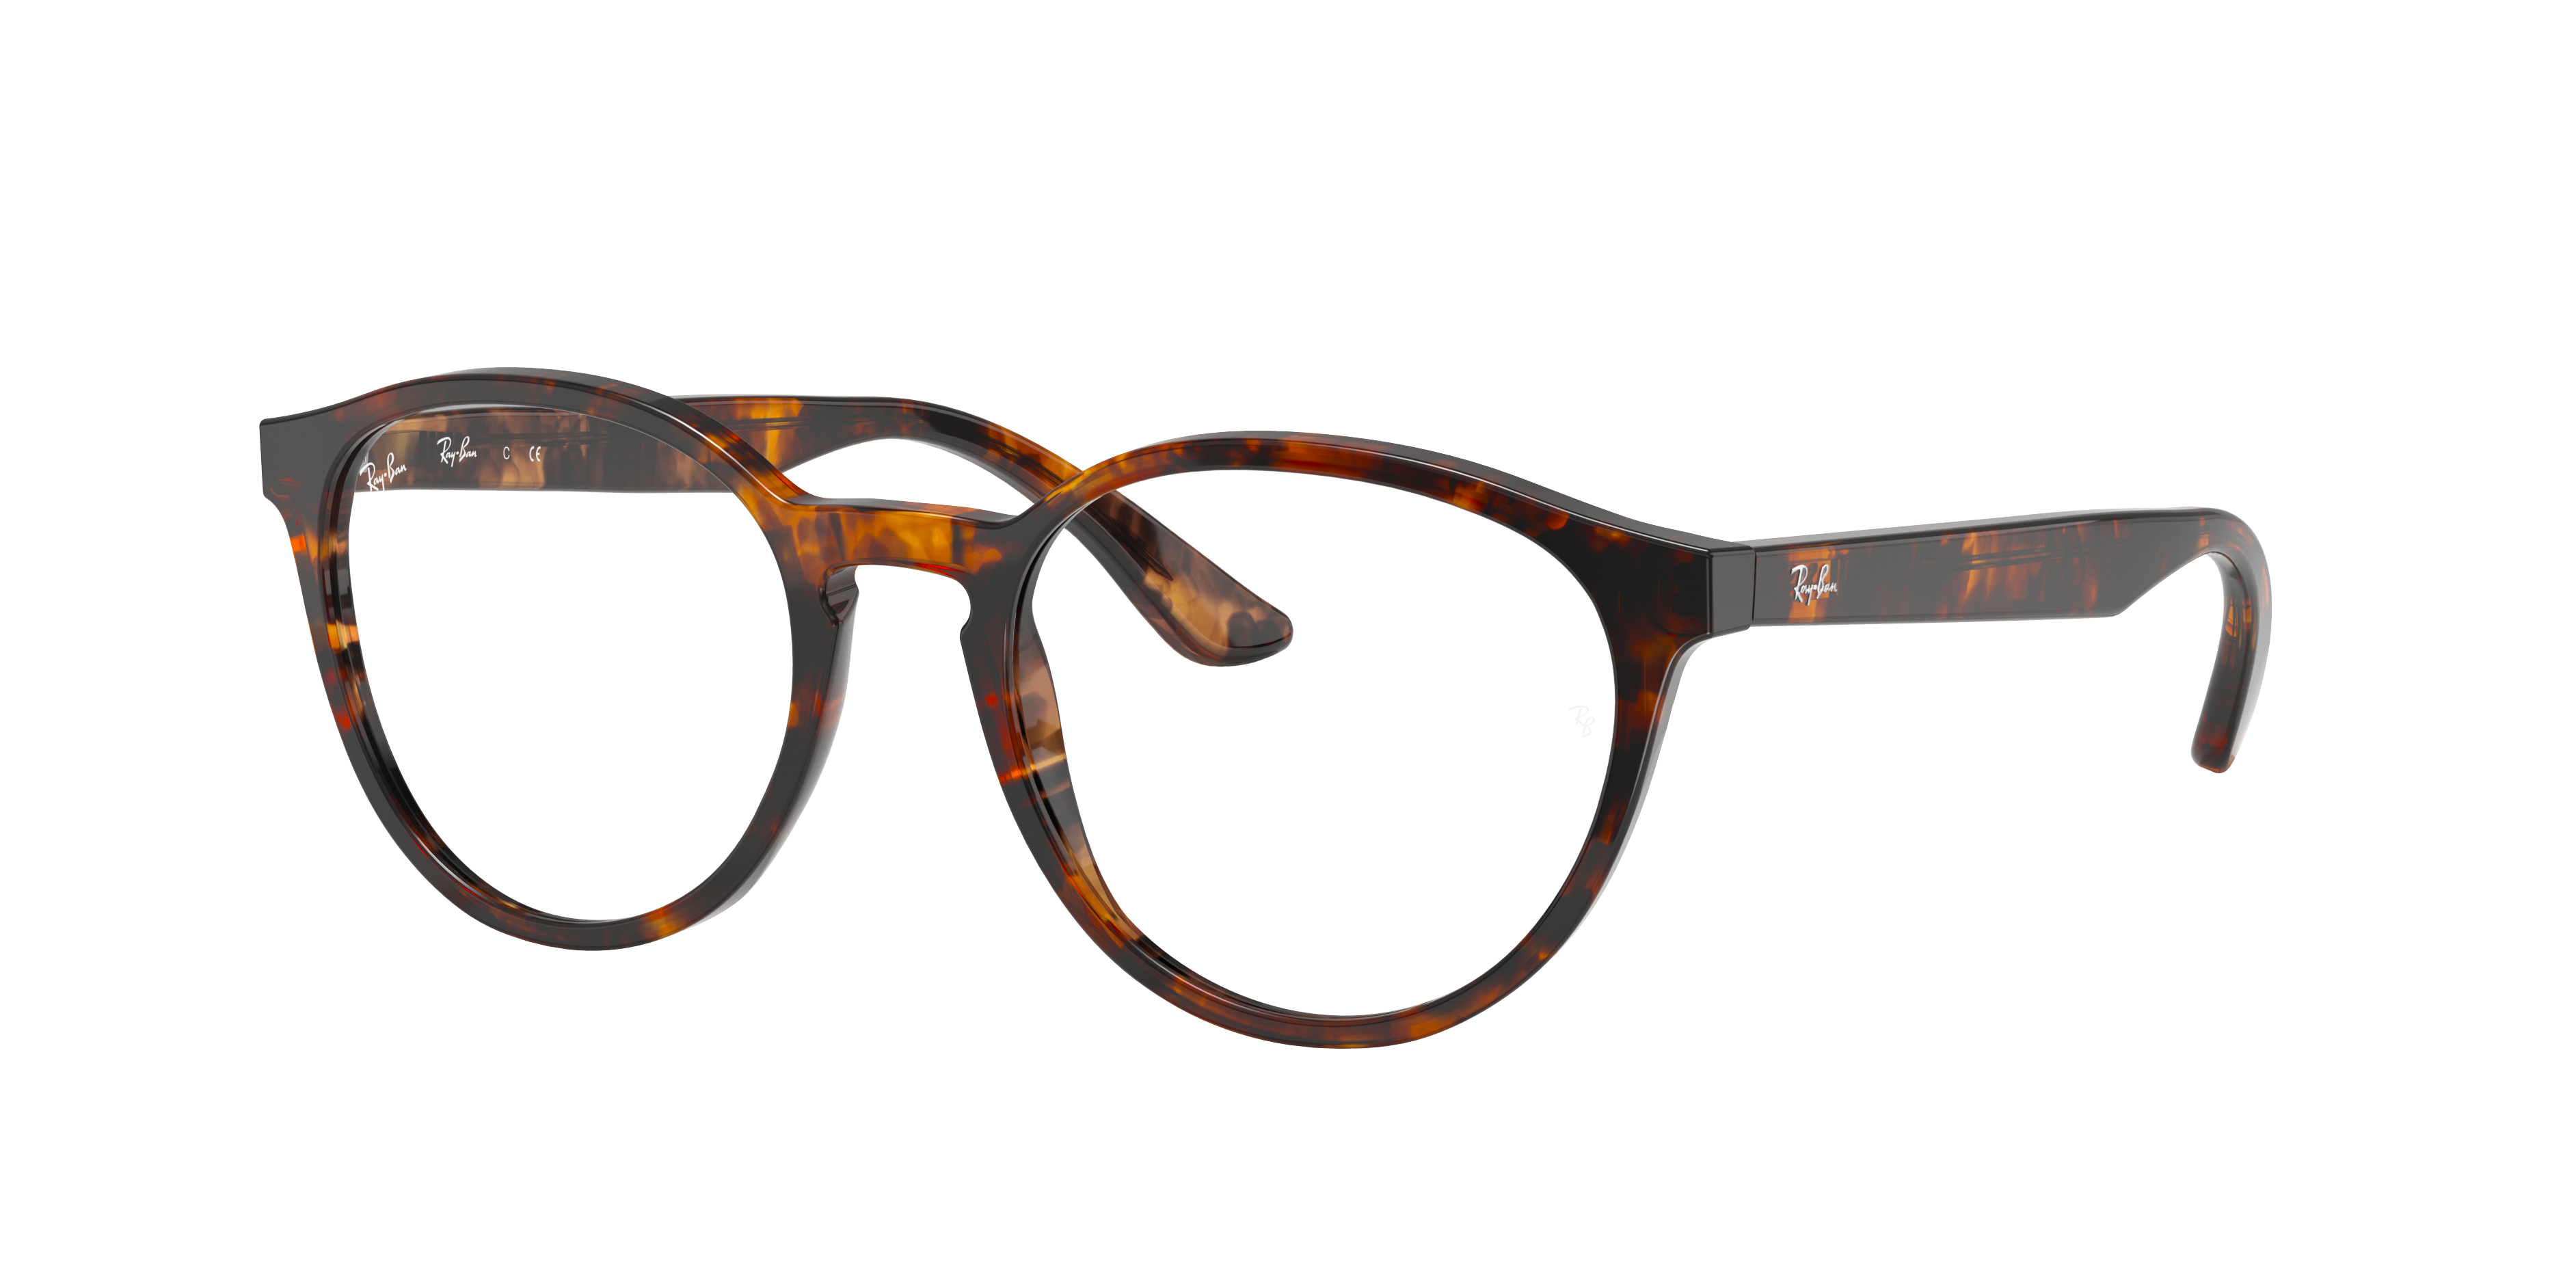 Rb5380 Optics Eyeglasses with Tortoise Frame | Ray-Ban®